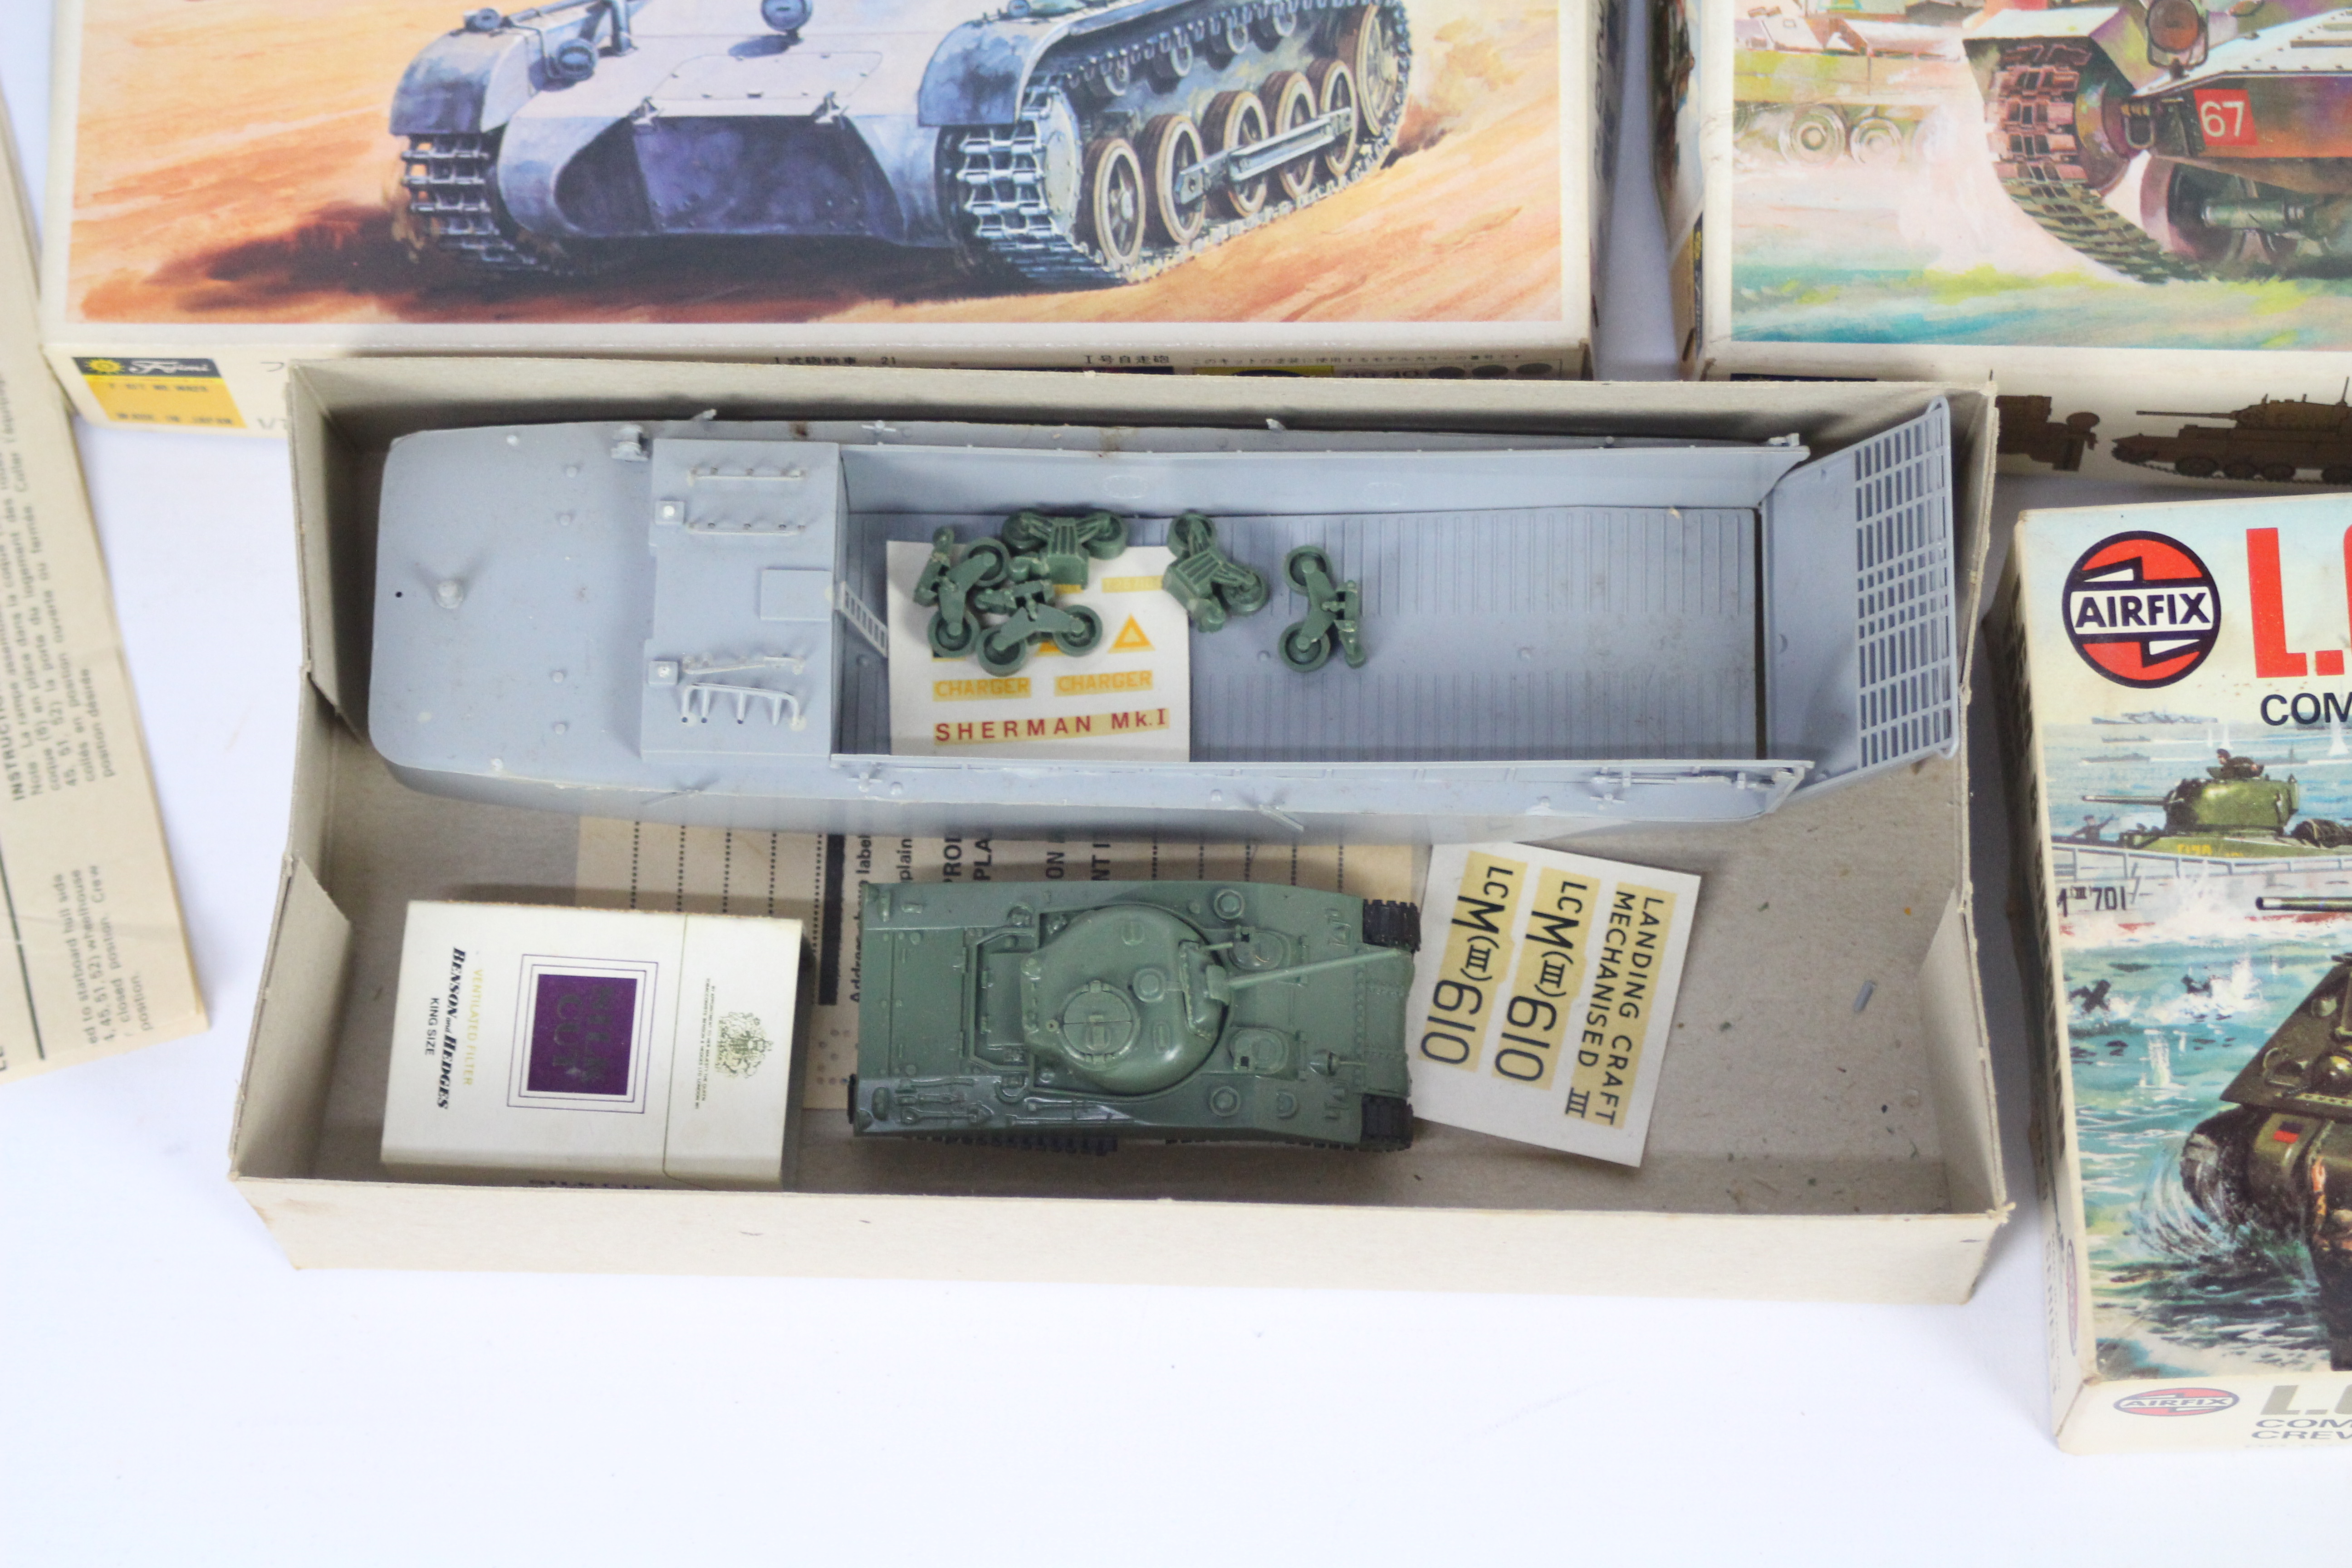 Airfix - Fujimi - Nitto Kagaku - 5 x boxed military model kits in 1:76 scale including LCM III & - Image 3 of 6